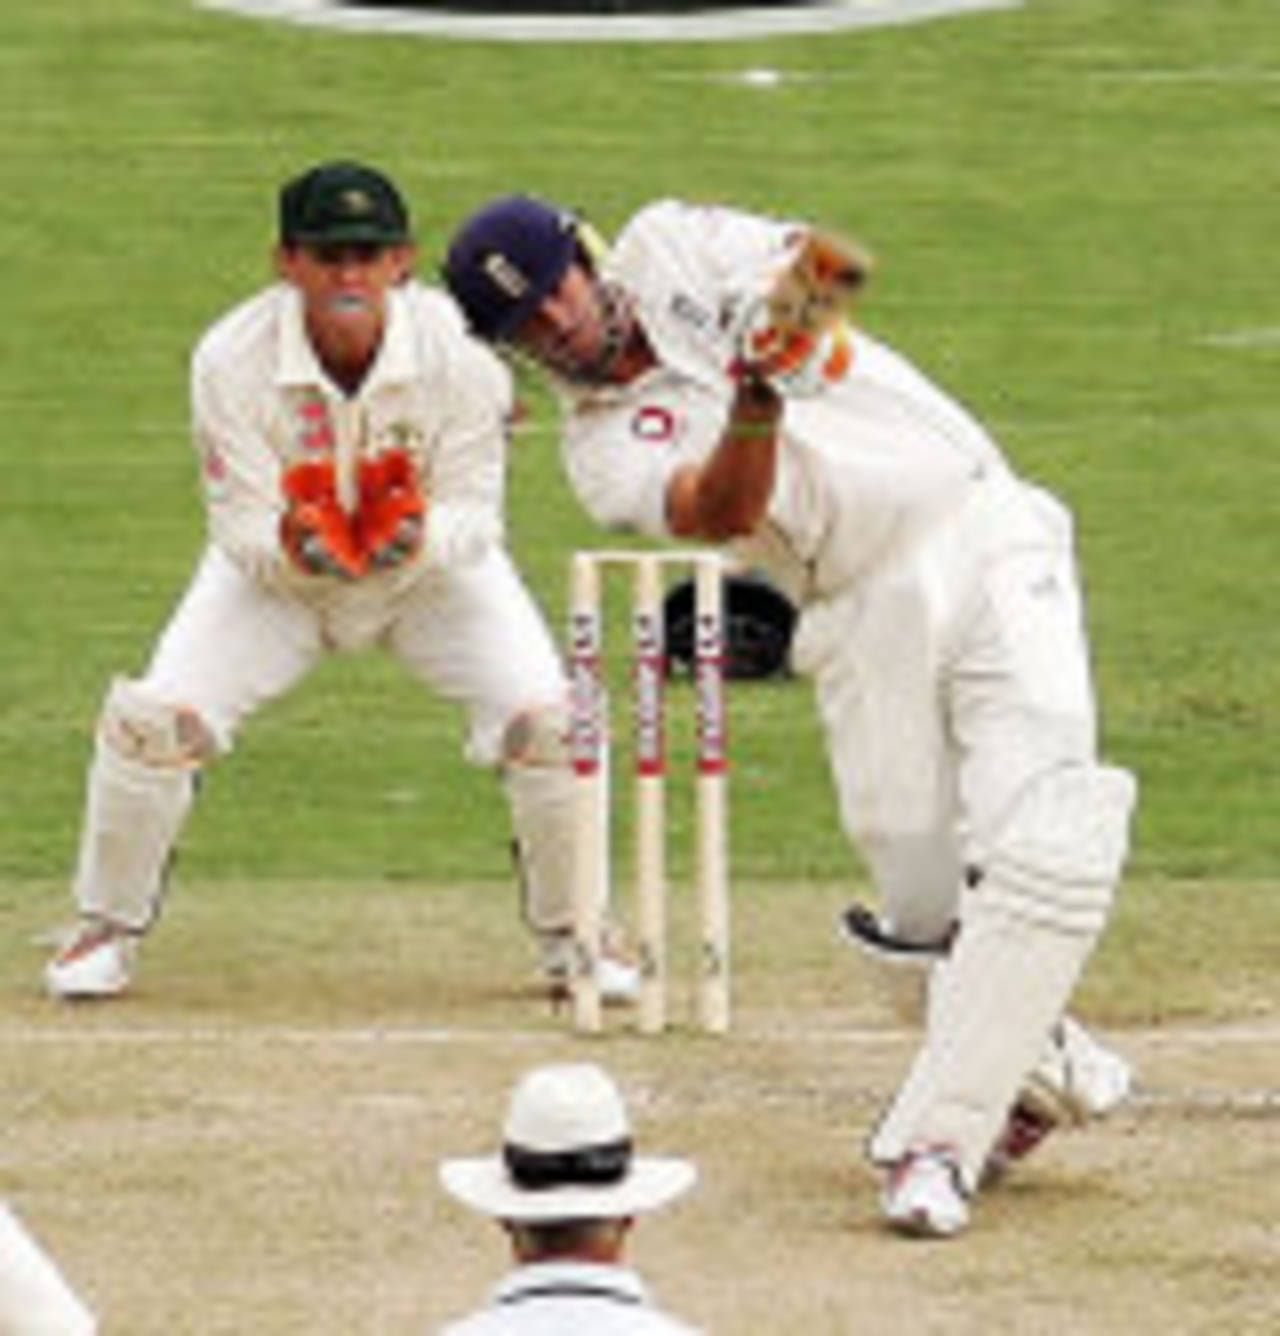 Kevin Pietersen lofts Shane Warne over the top, Australia v England, 2nd Test, Adelaide, December 1, 2006